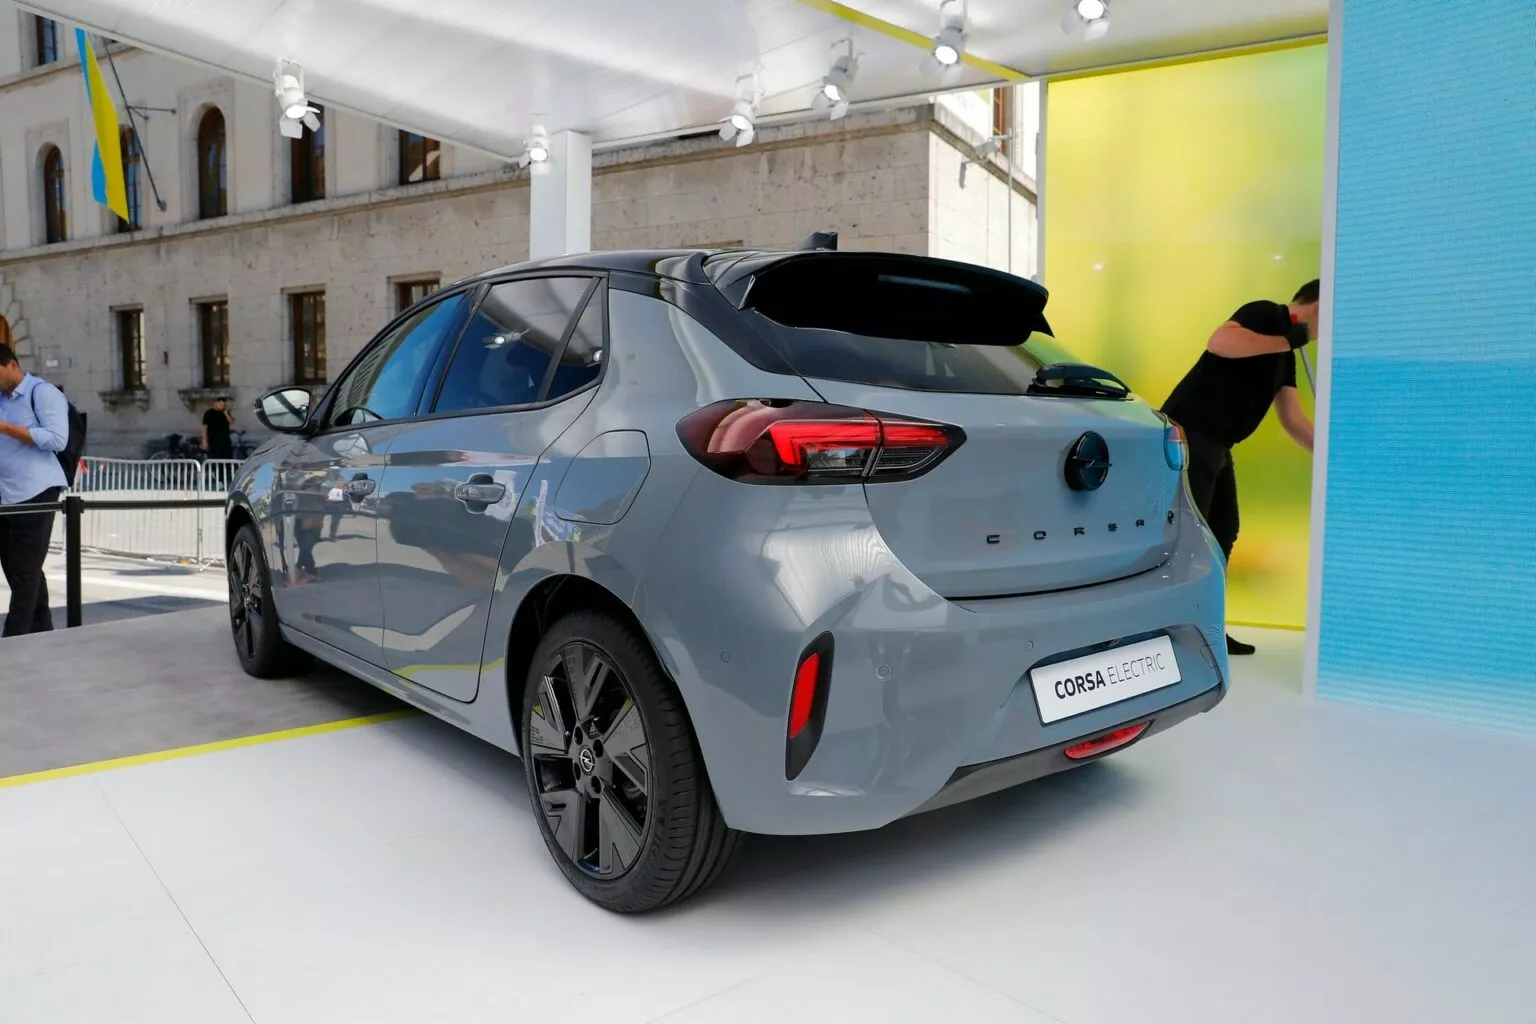 Novo Opel Corsa Electric 2024 / Photo: Baldauf / ten Brink / Carscoops